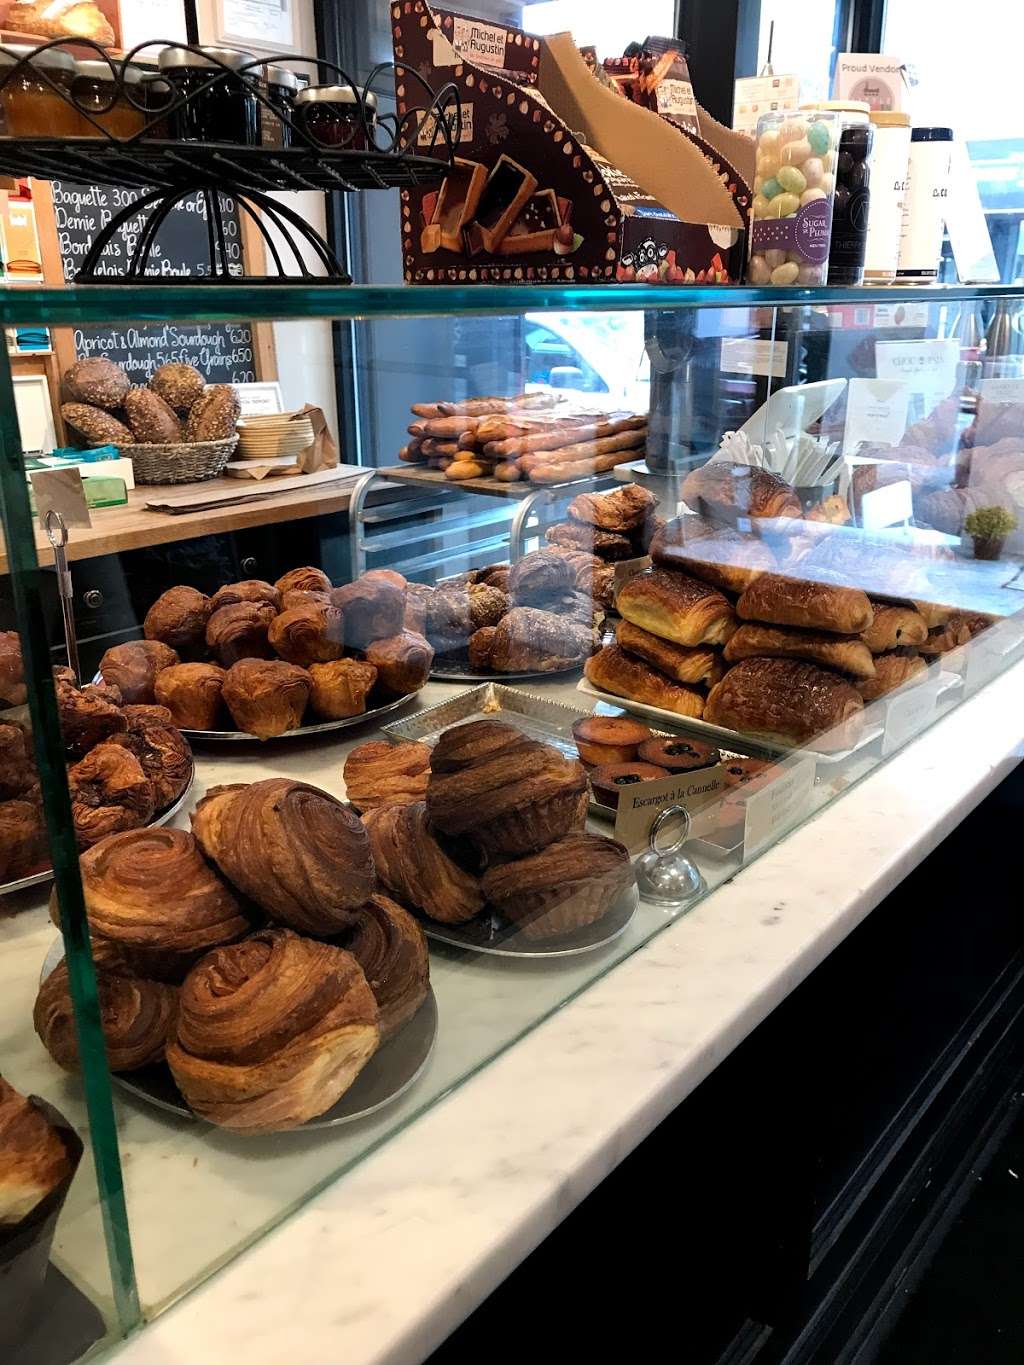 Choc O Pain French Bakery and Café | Photo 5 of 10 | Address: 157 1st St, Hoboken, NJ 07030, USA | Phone: (201) 710-5175